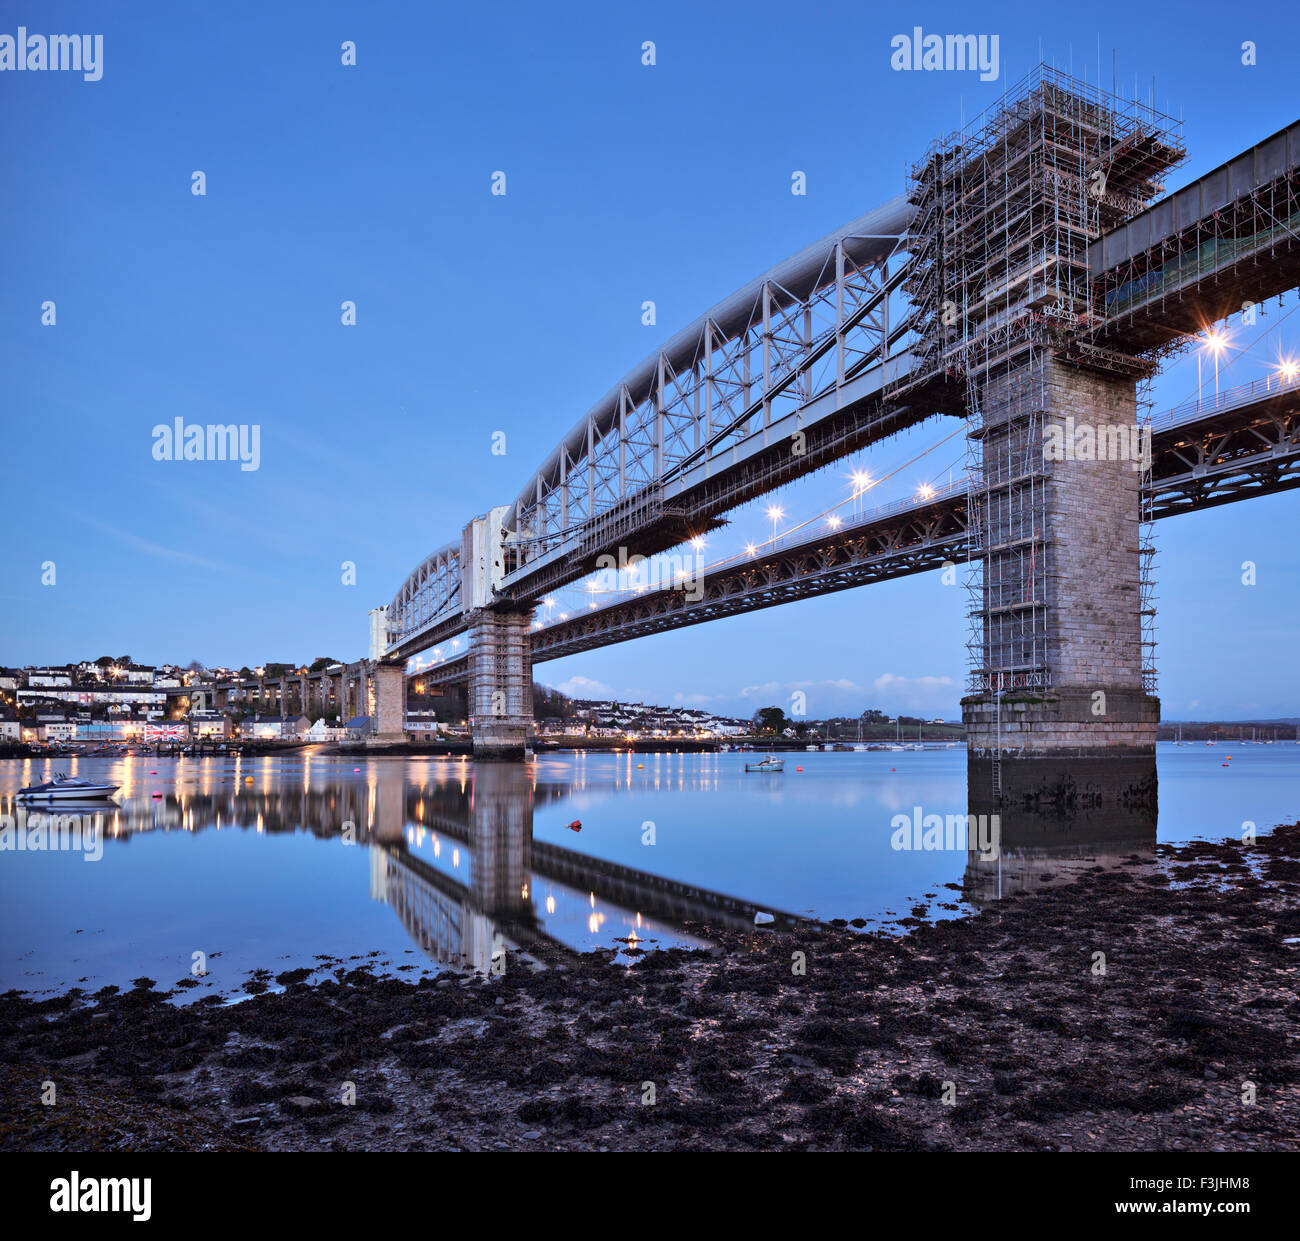 Early Morning at the Royal Albert Railway bridge, Saltash, Plymouth Stock Photo